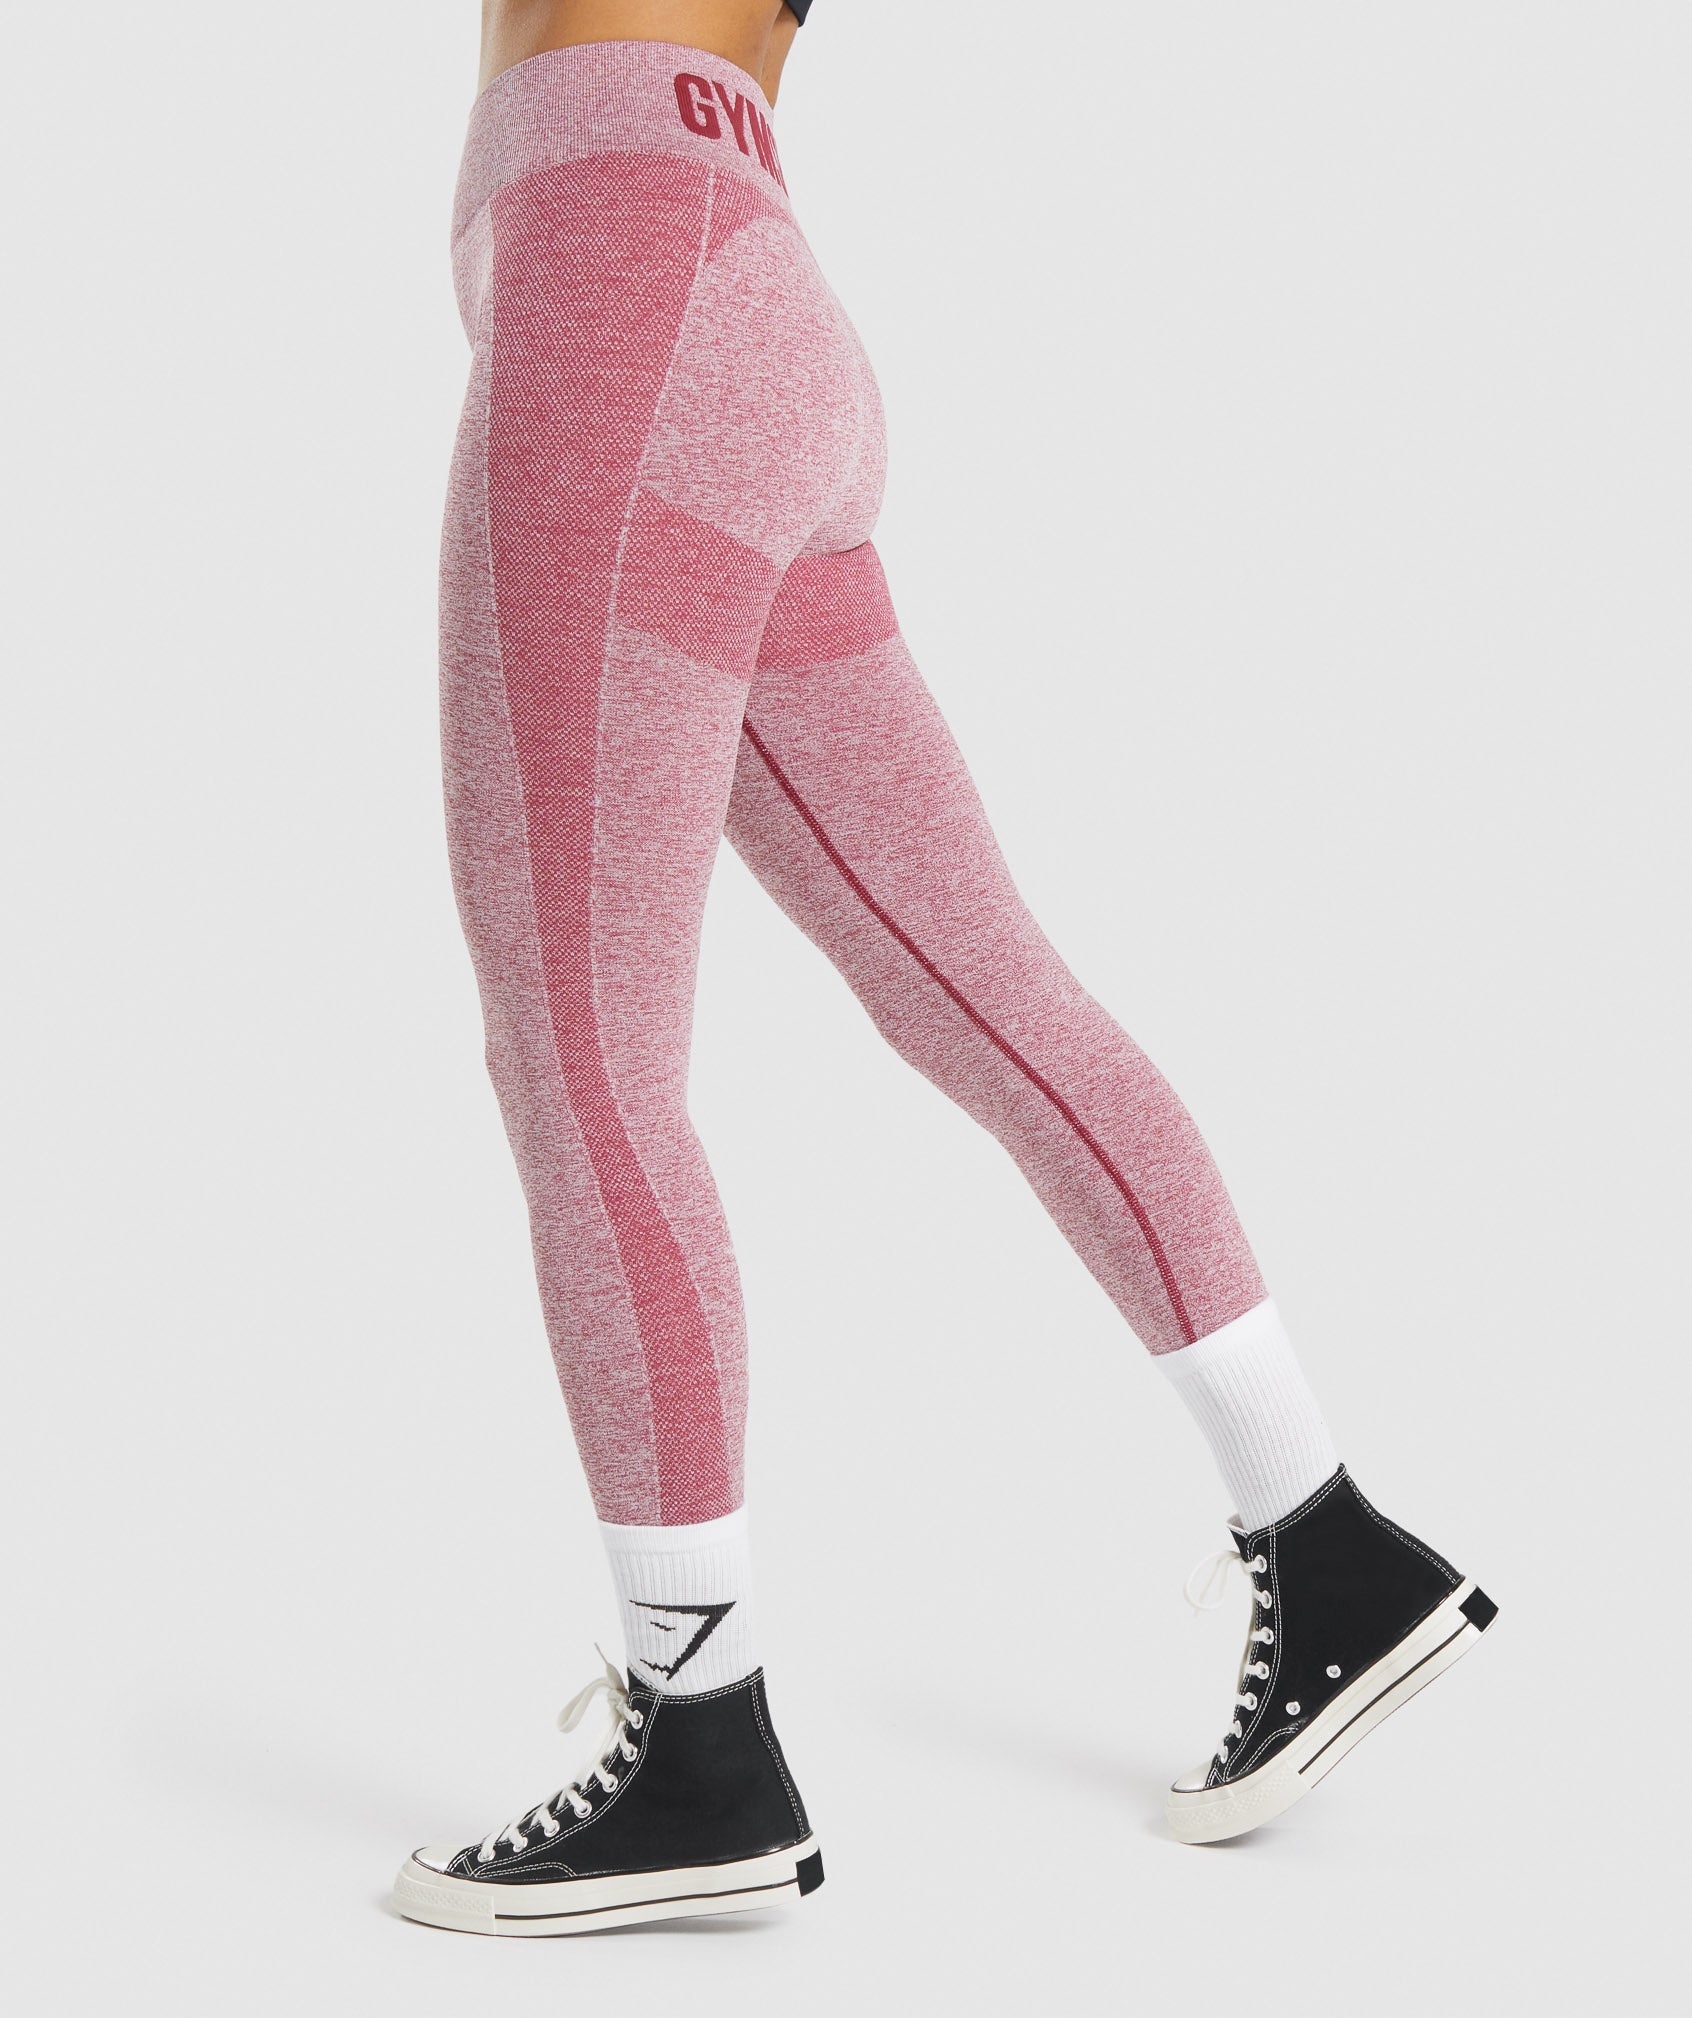 Gymshark Flex High Waisted Leggings - Charcoal Marl/ Dusky Pink